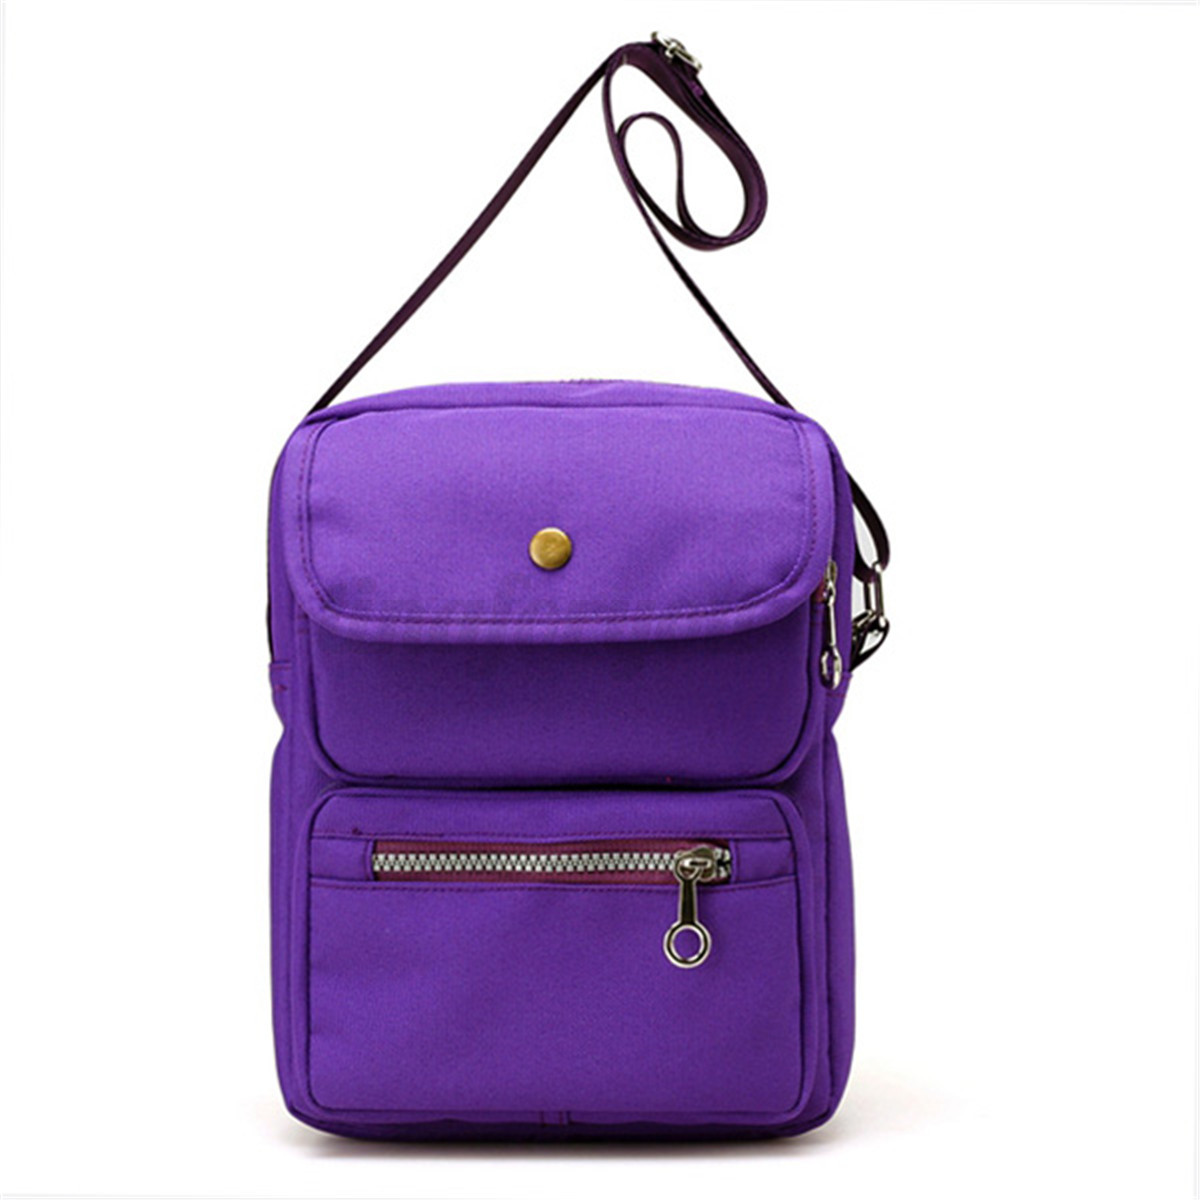 Women Nylon Travel Crossbody Shoulder Bag Travel Passport Purse Tote Handbag Hot | eBay